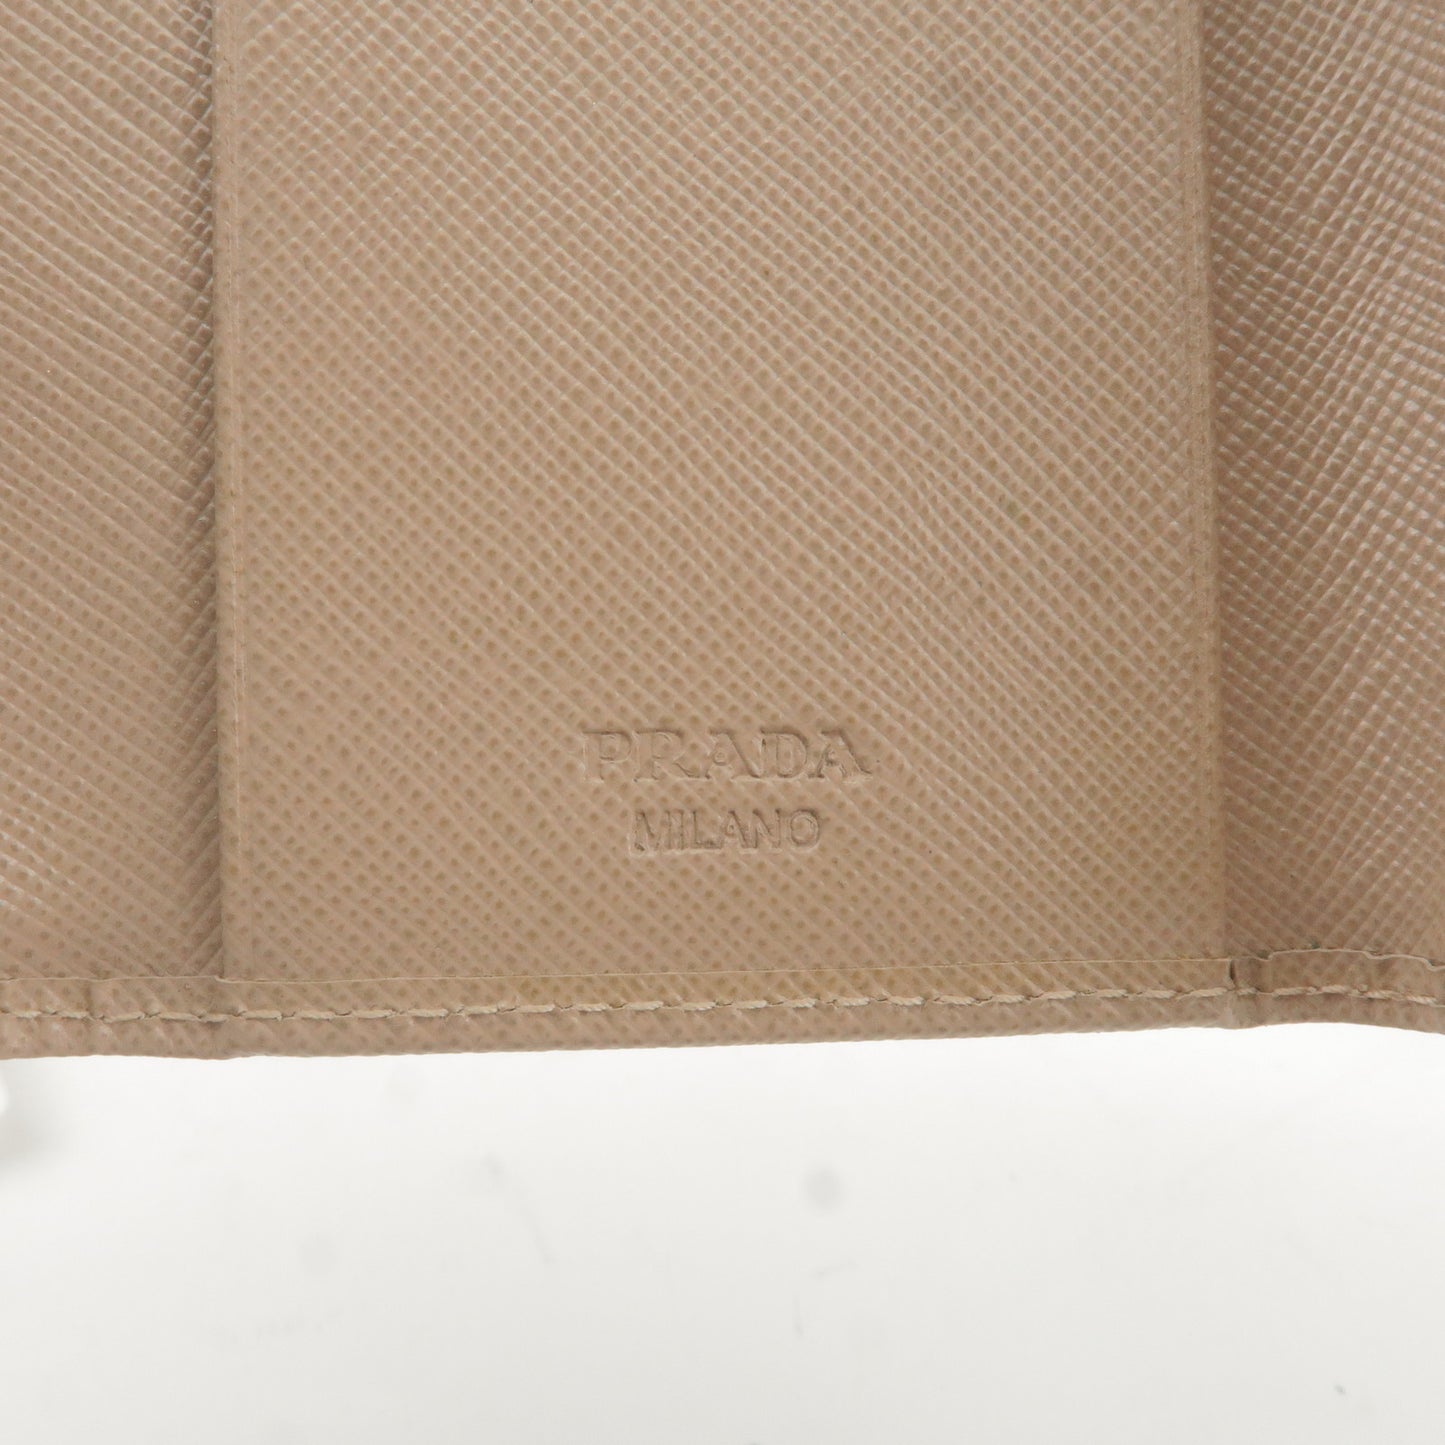 PRADA Leather 6 Key Case Key Holder Beige 1M0222